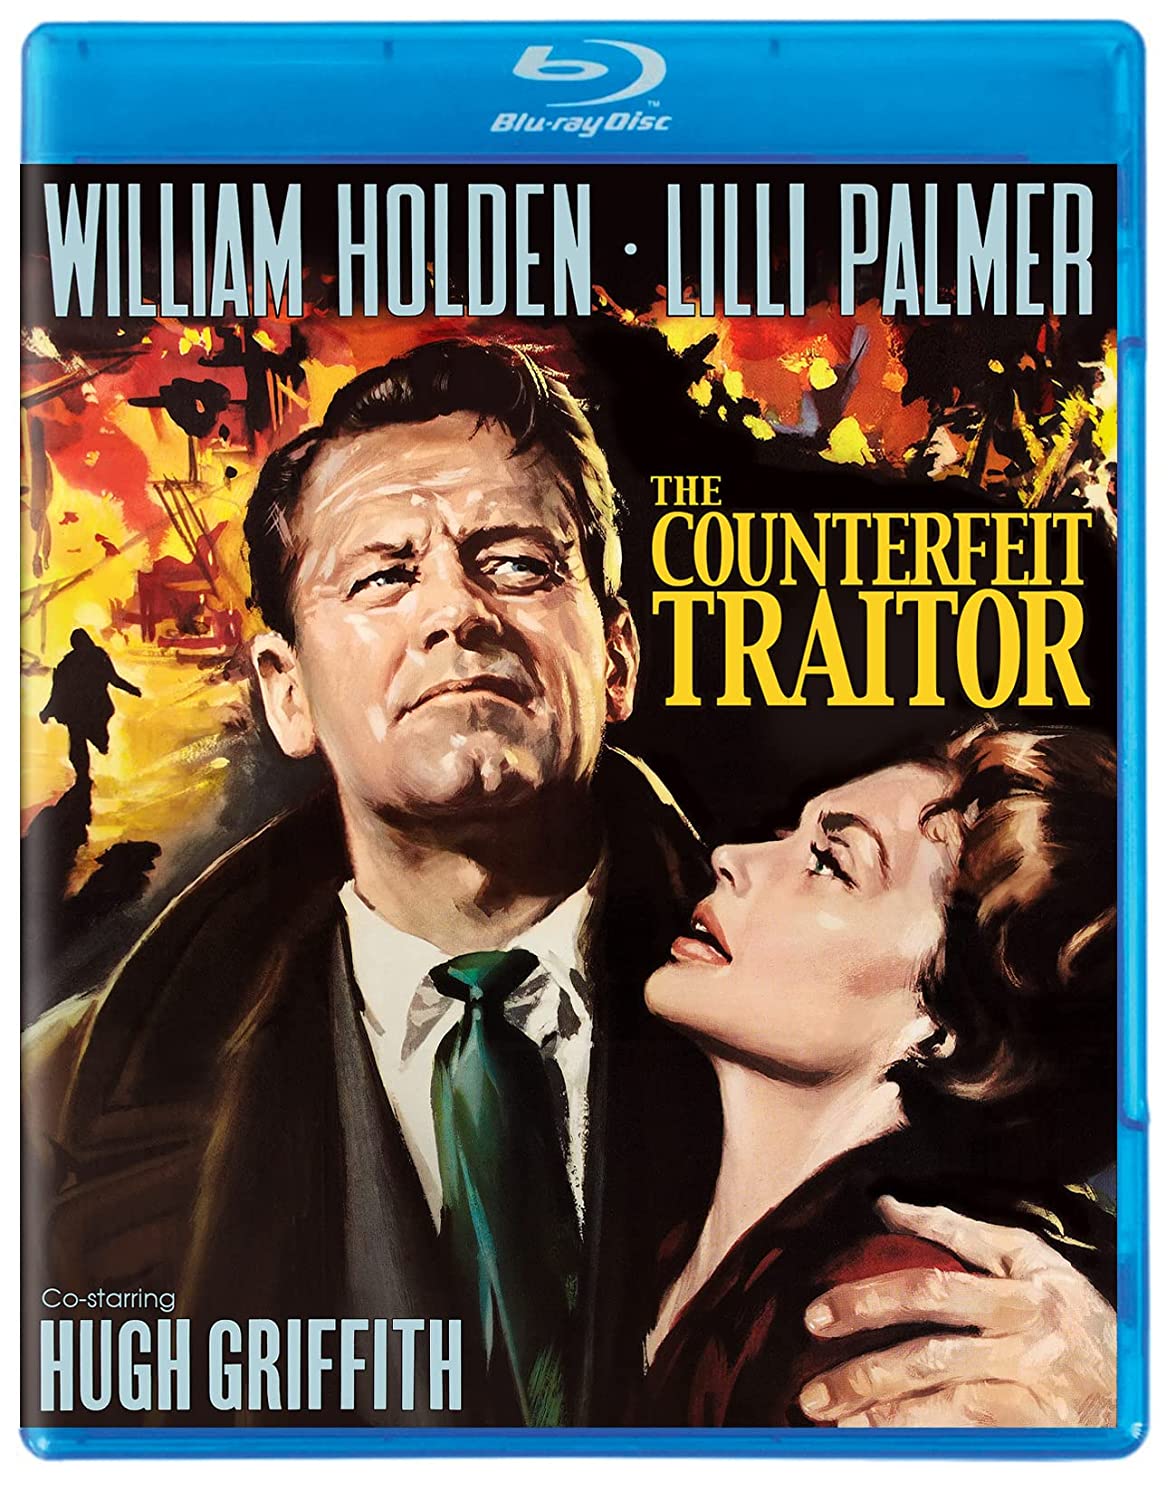 The Counterfeit Traitor, starring William Holden, Lilli Palmer